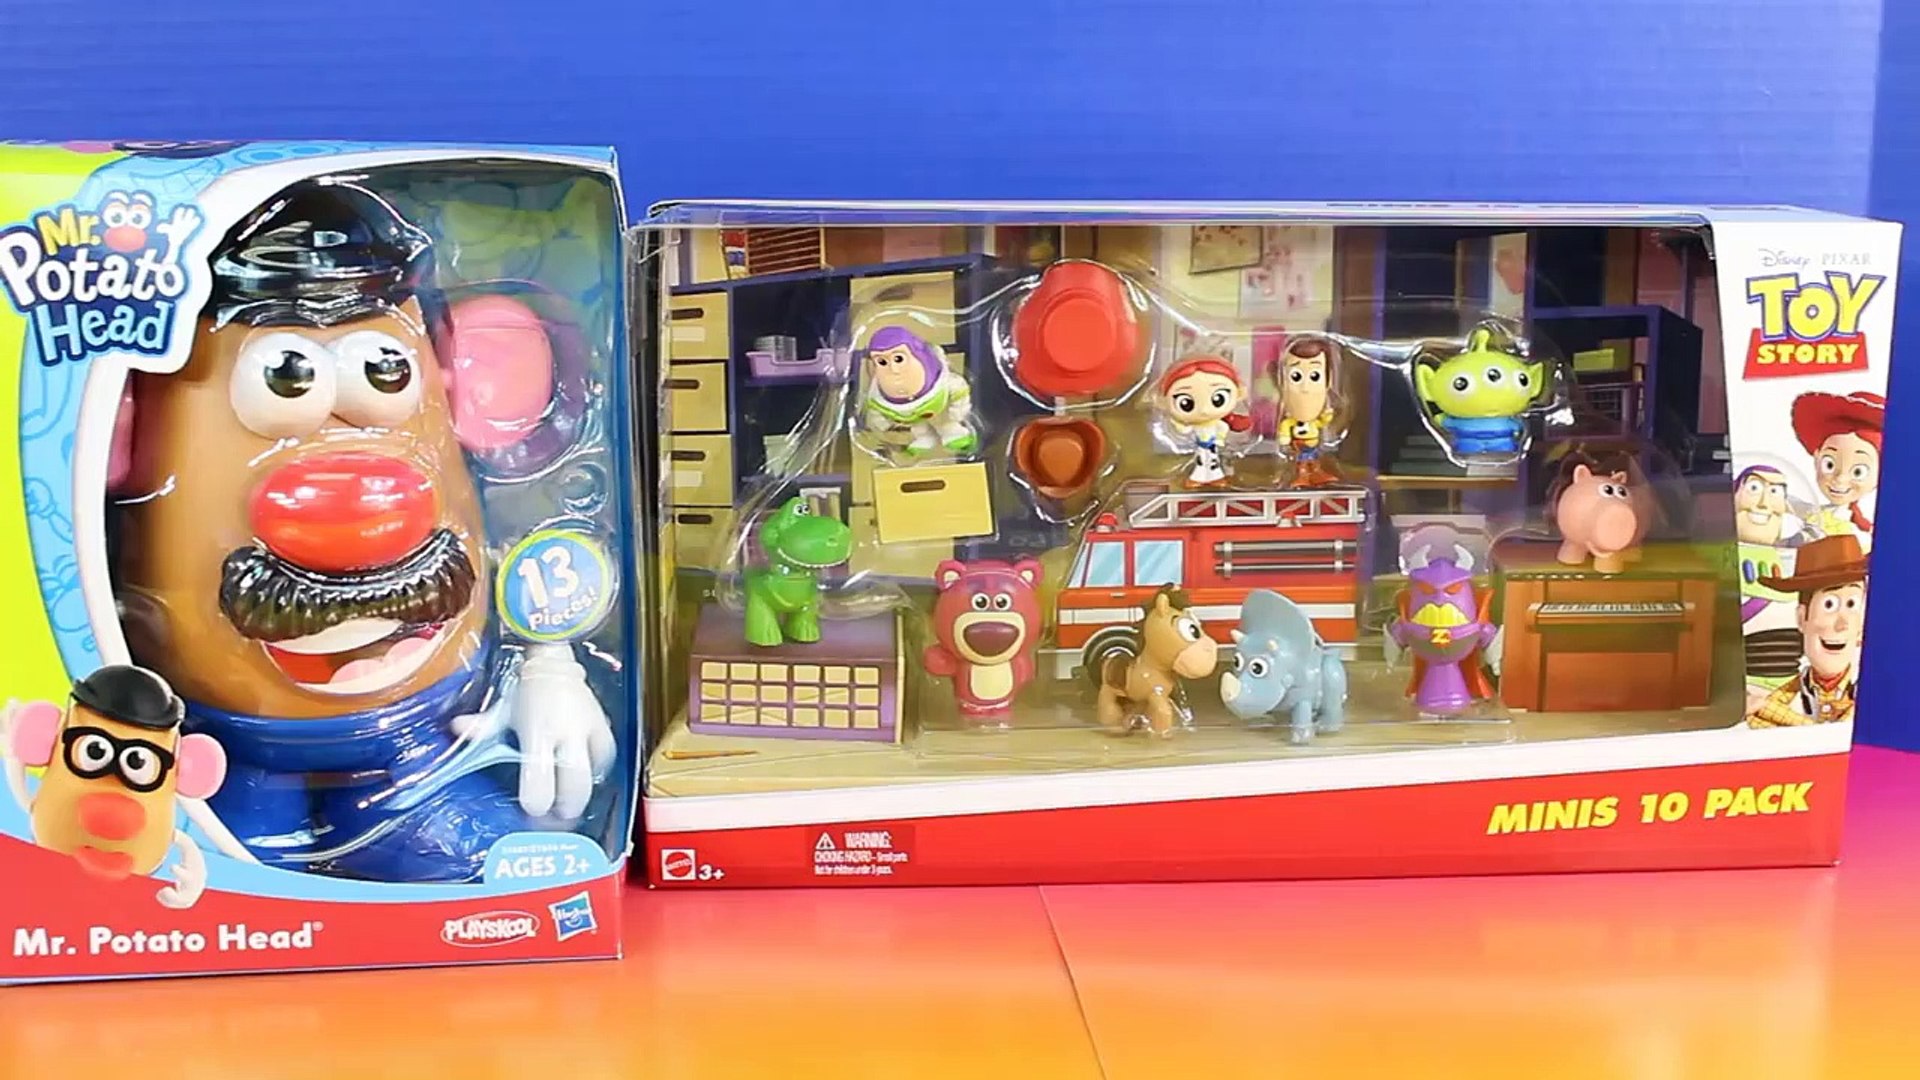 Disney Pixar Toy Story Minis 10 Pack Play On The Playmobil Playground With  Mr. Potato Head - video Dailymotion